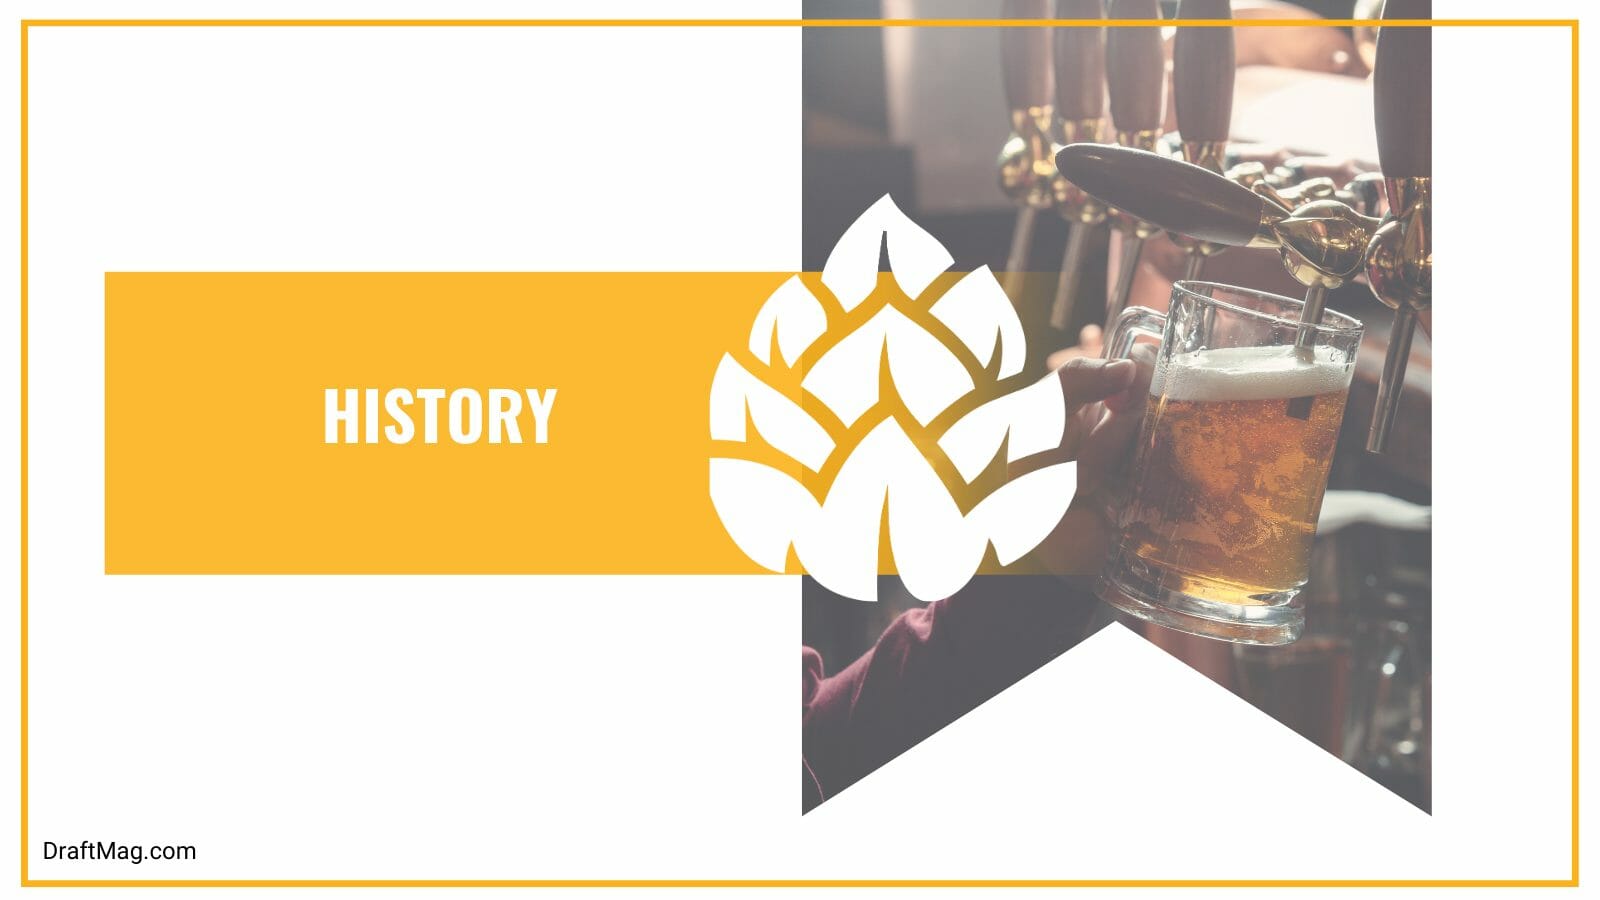 A great history of xingu beer